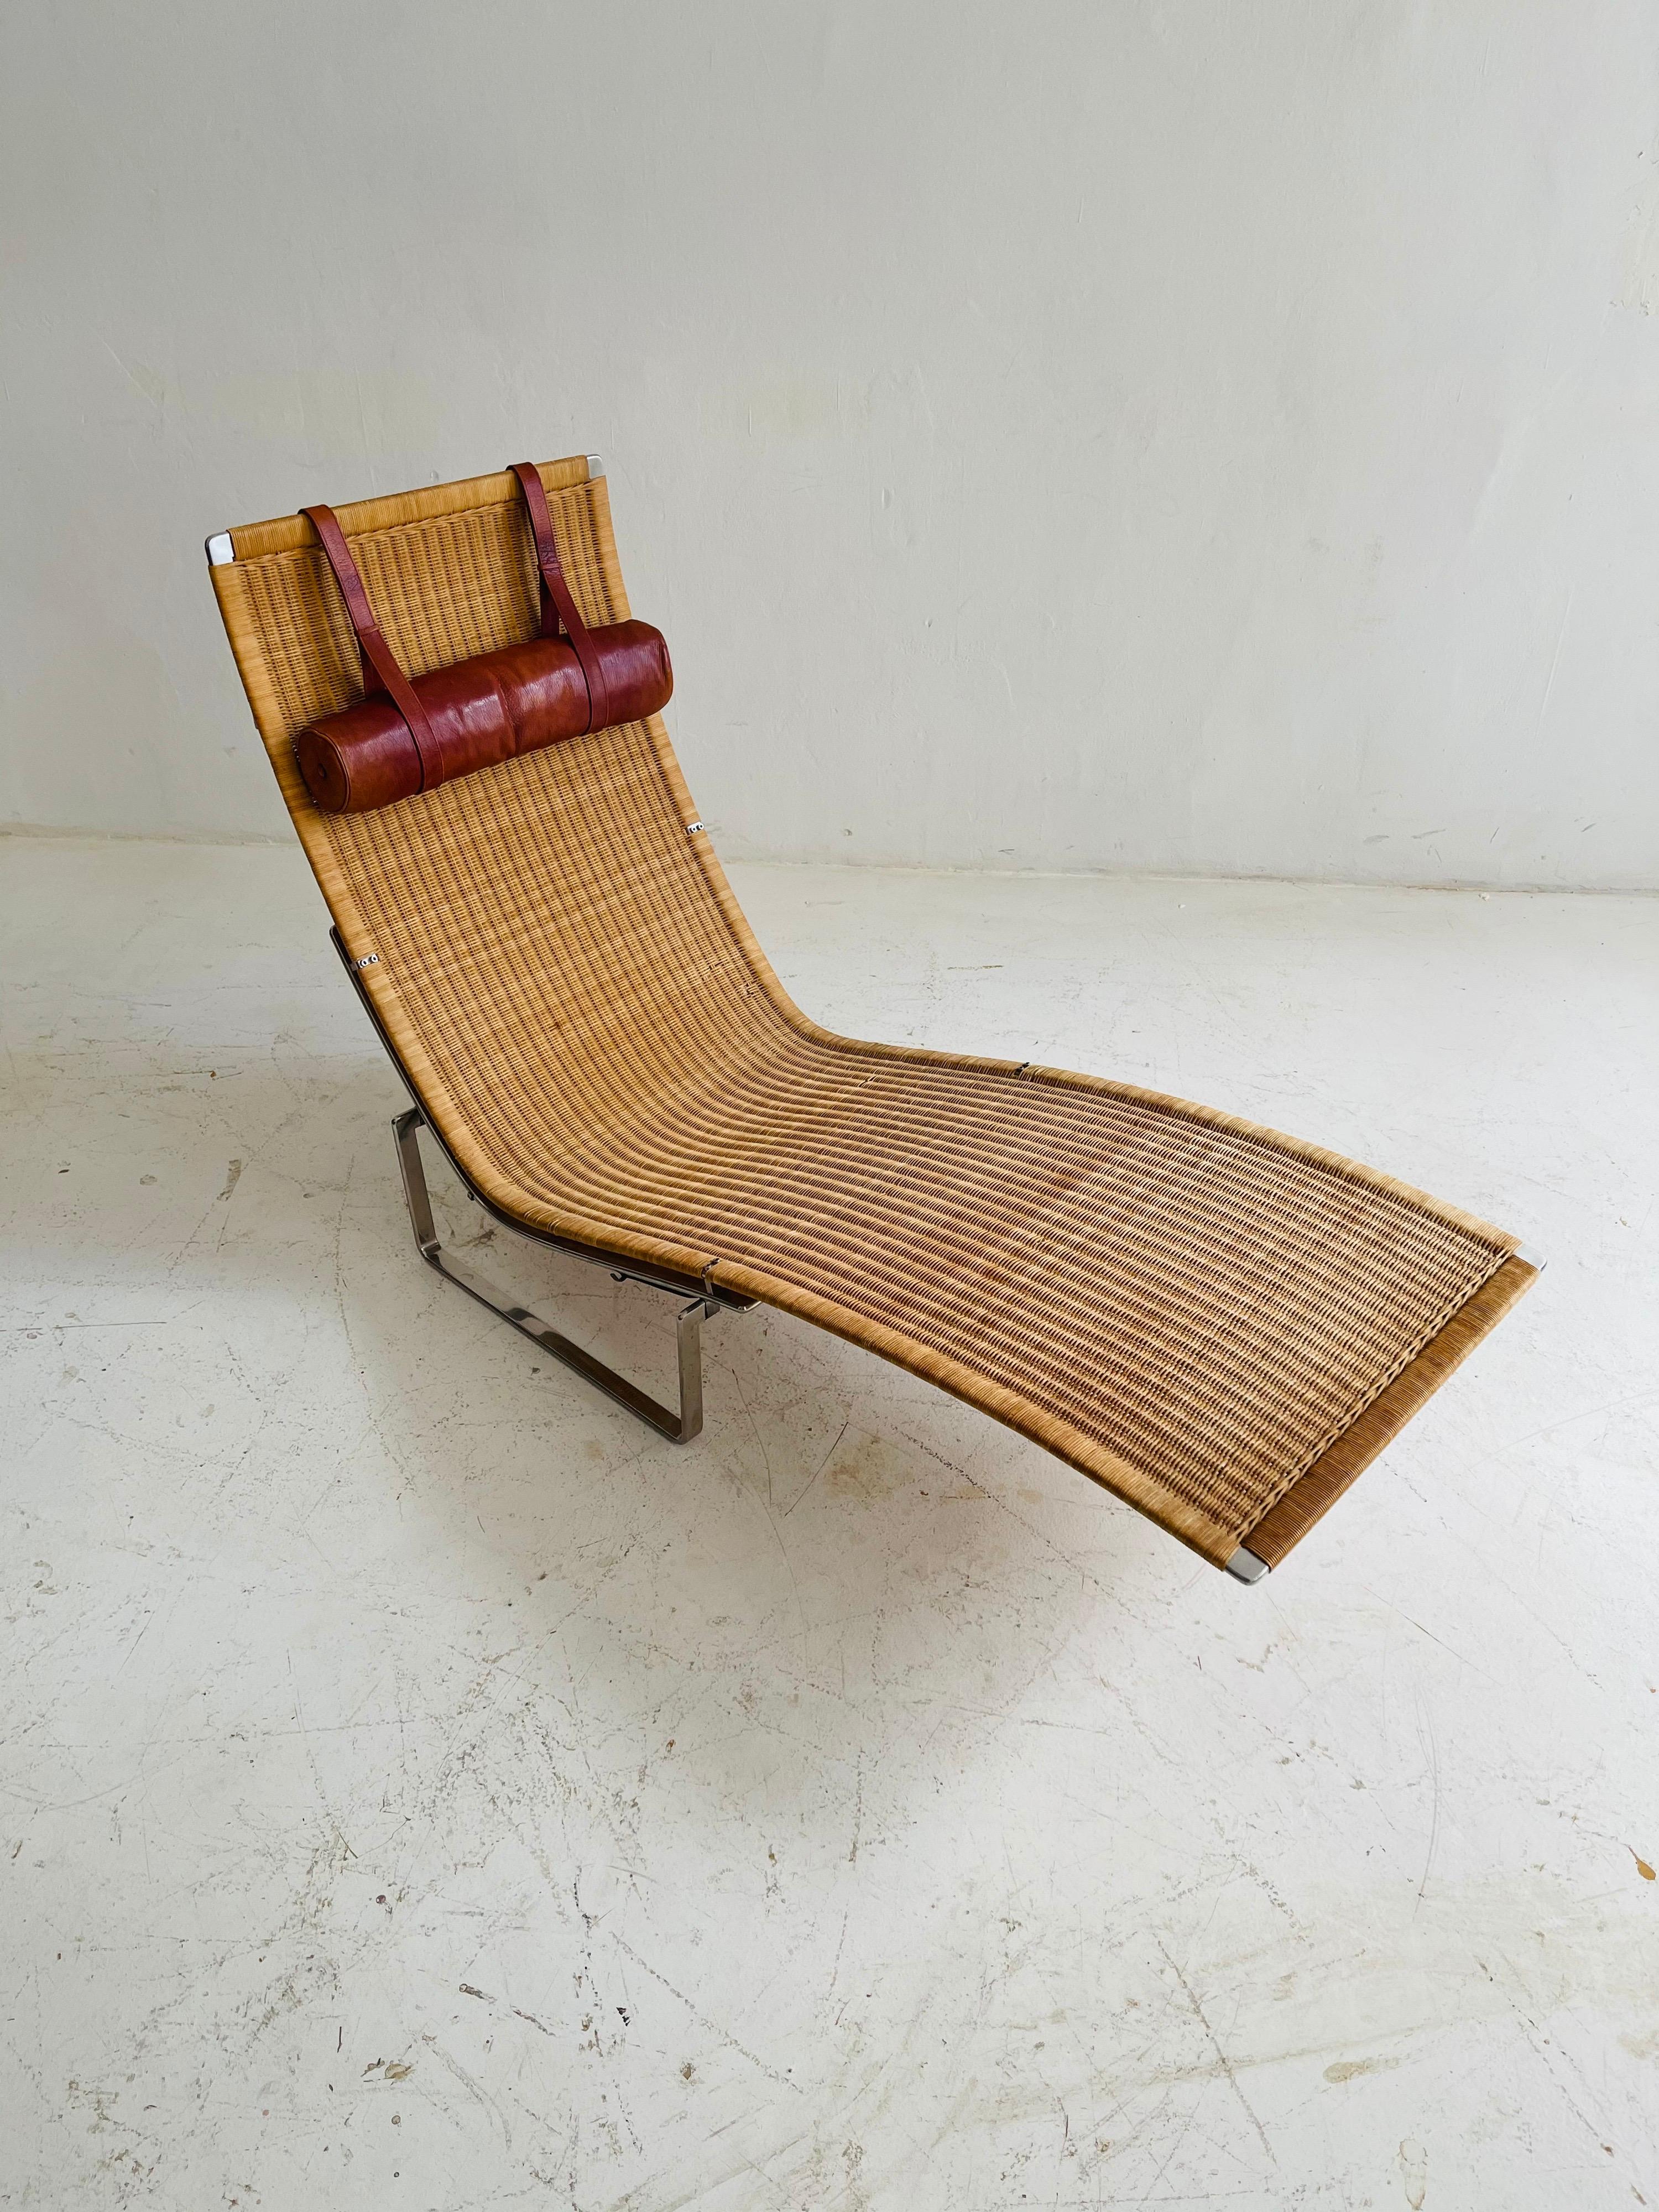 Poul Kjaerholm PK24 chaise lounge by Kold Christensen, Denmark, 1970s.